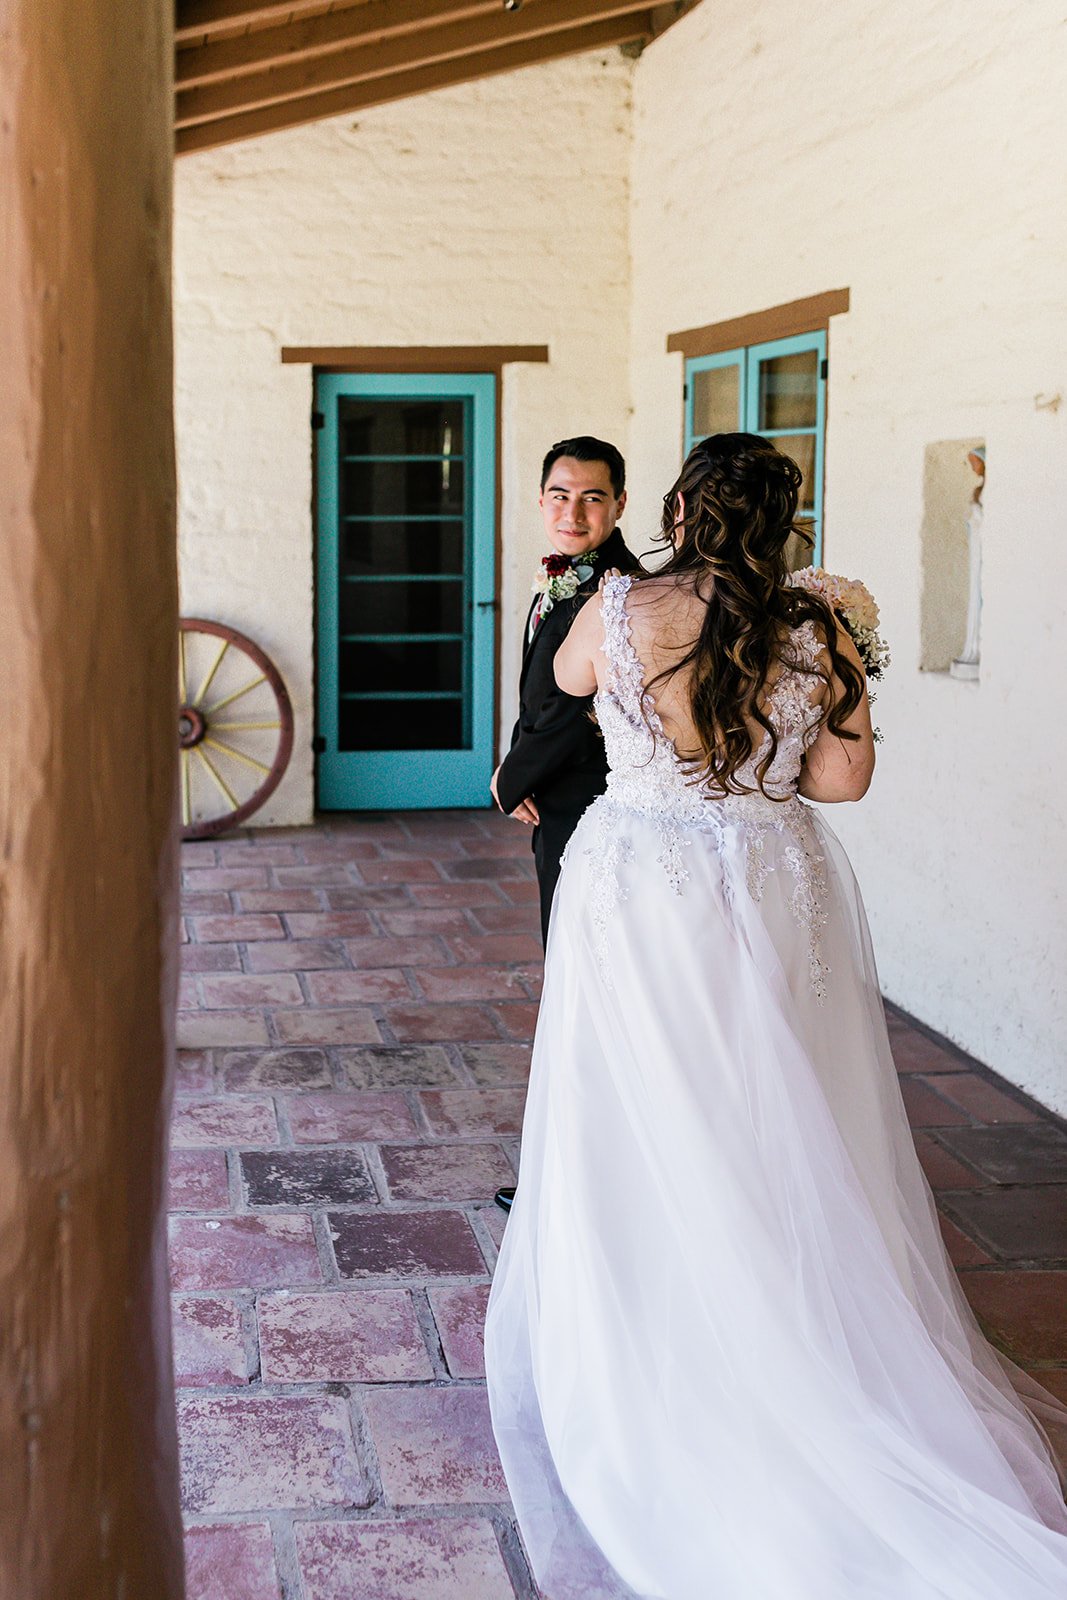 Wedding day first look at Tesoro Adobe Historic Park in Santa Clarita